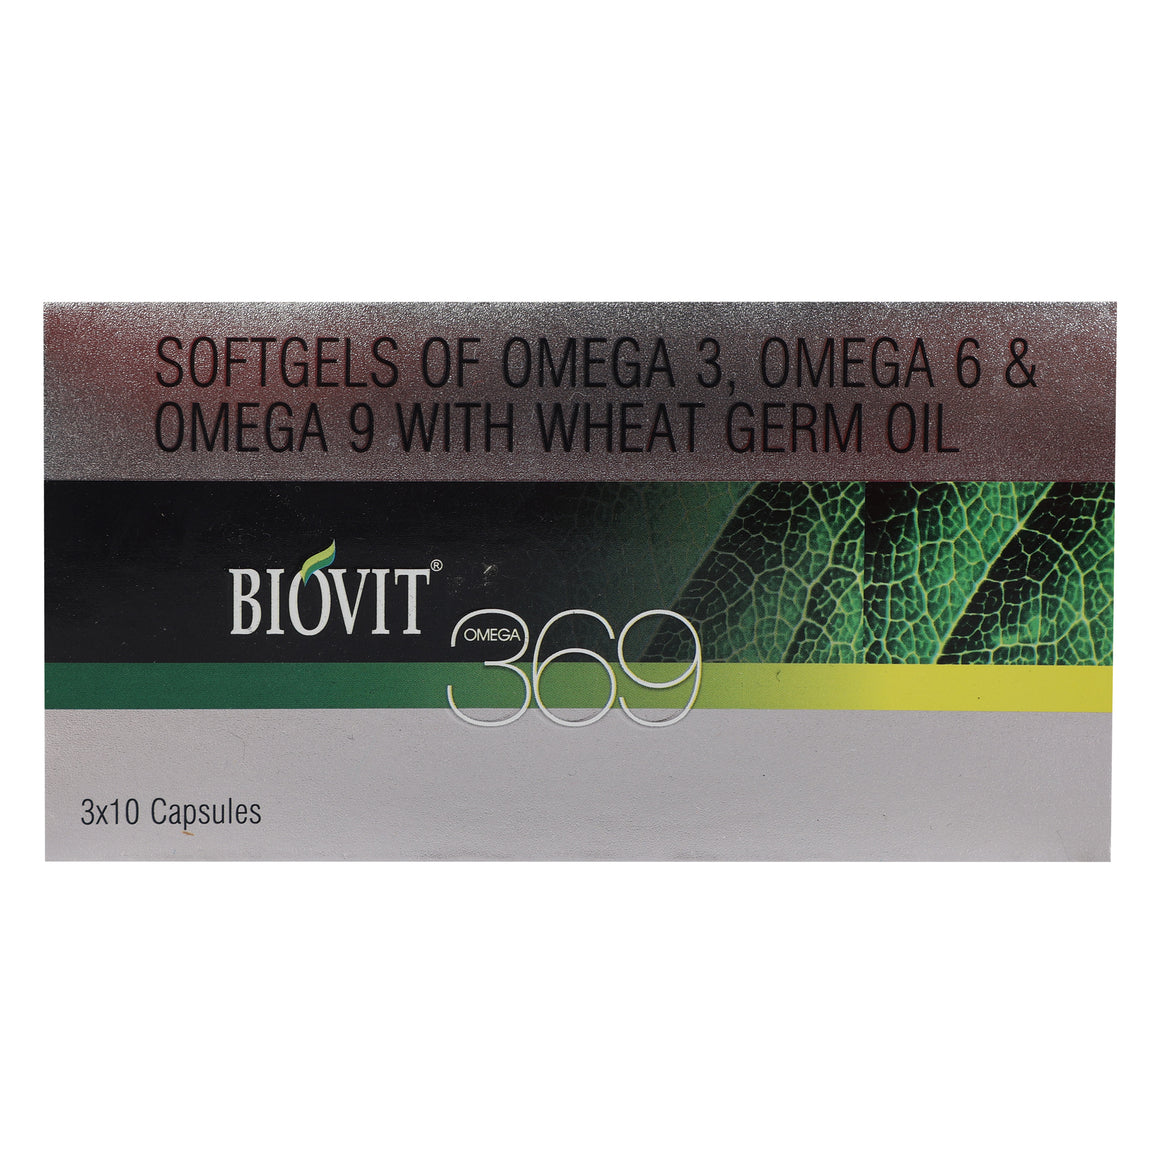 BIOVIT- 369- Vegetarian Omega Capsules